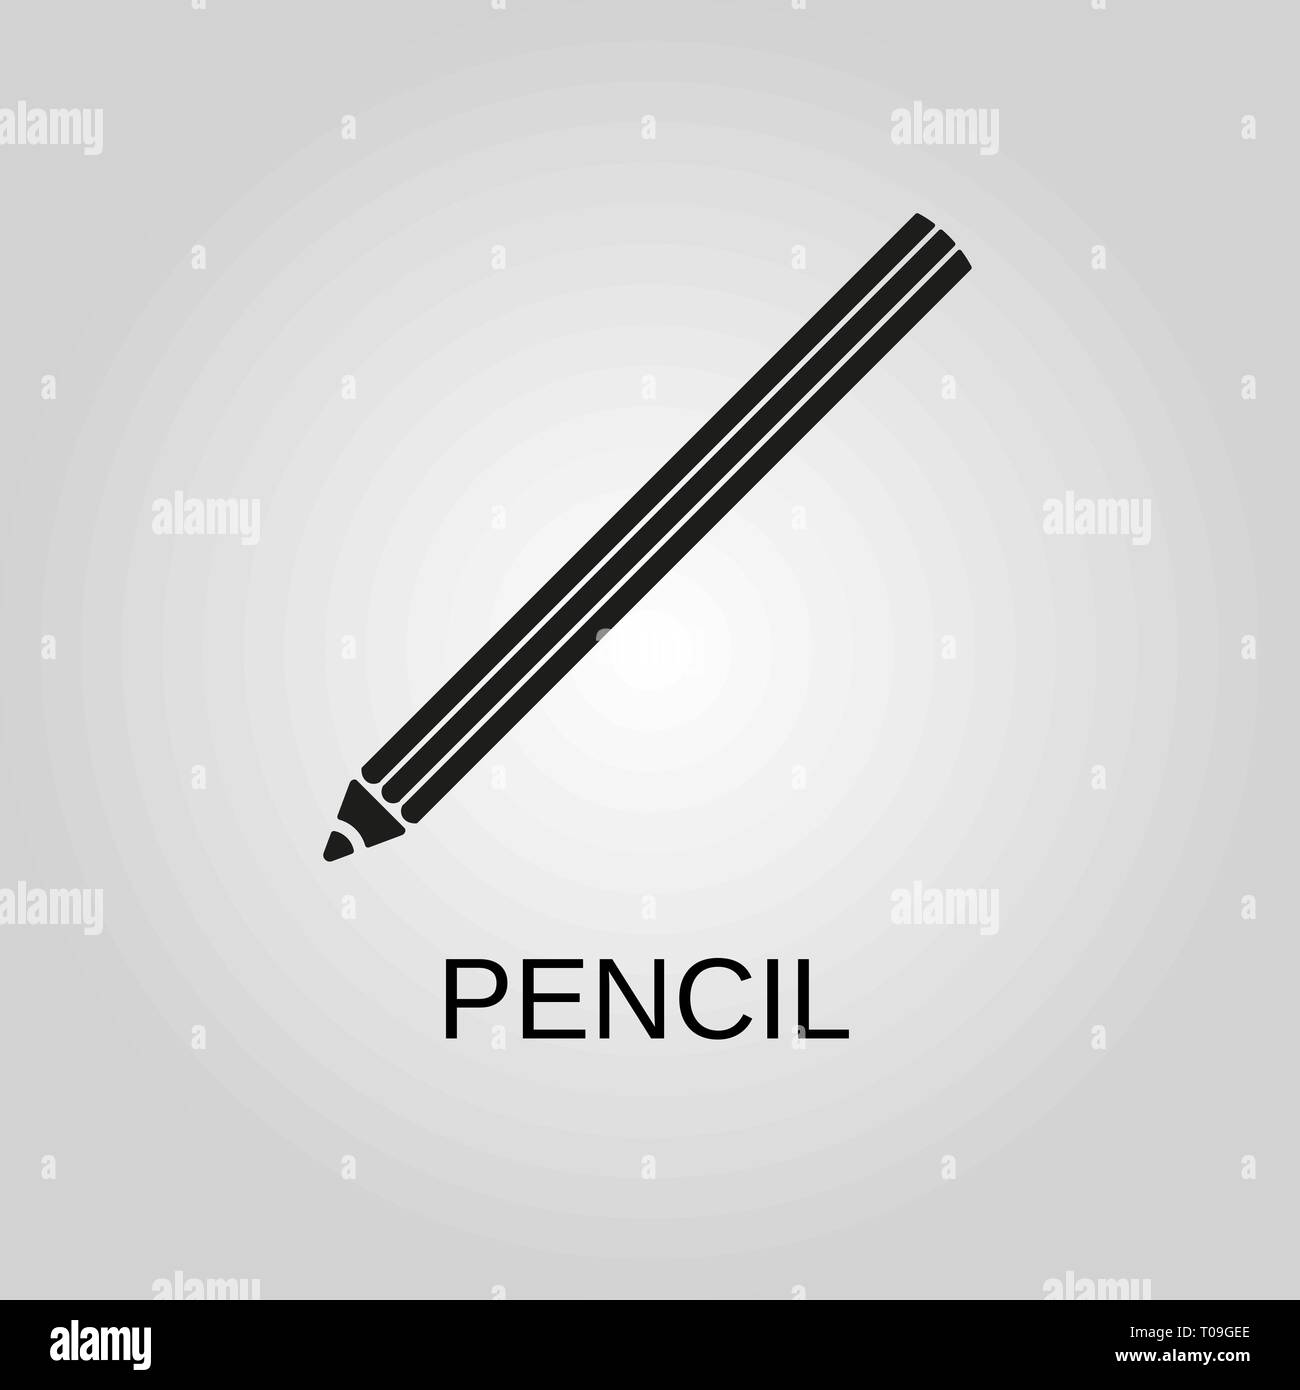 Pencil icon. Pencil symbol. Flat design. Stock - Vector illustration. Stock Vector